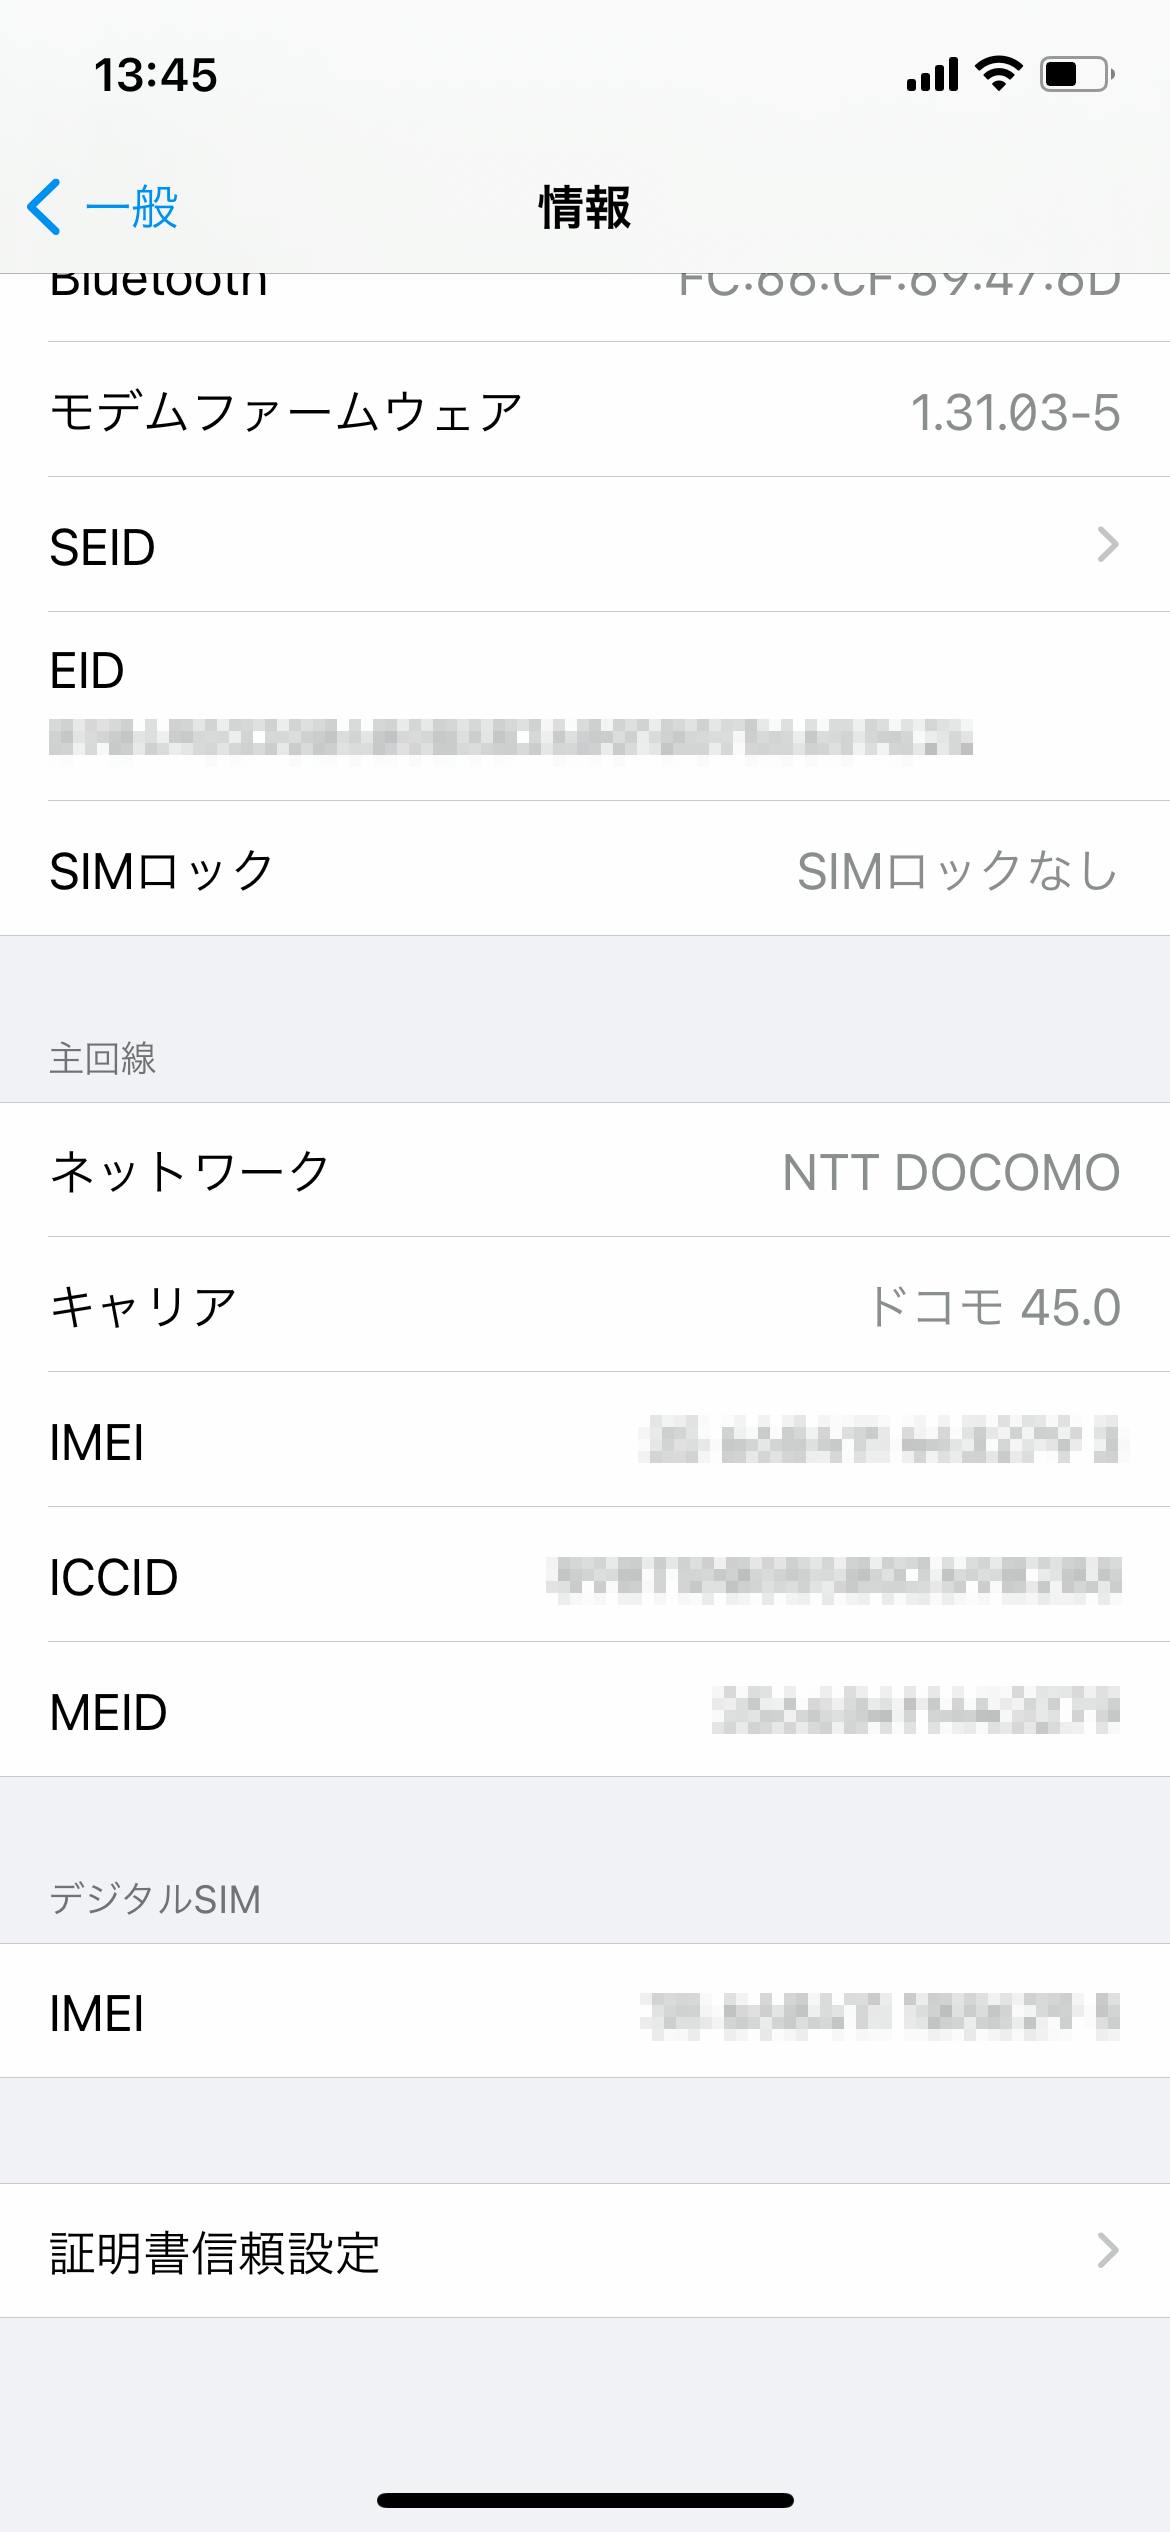 Simロック解除は絶対必要 自分でできる Iphone Android別に解除方法を解説 格安スマホ Sim Y U Mobile